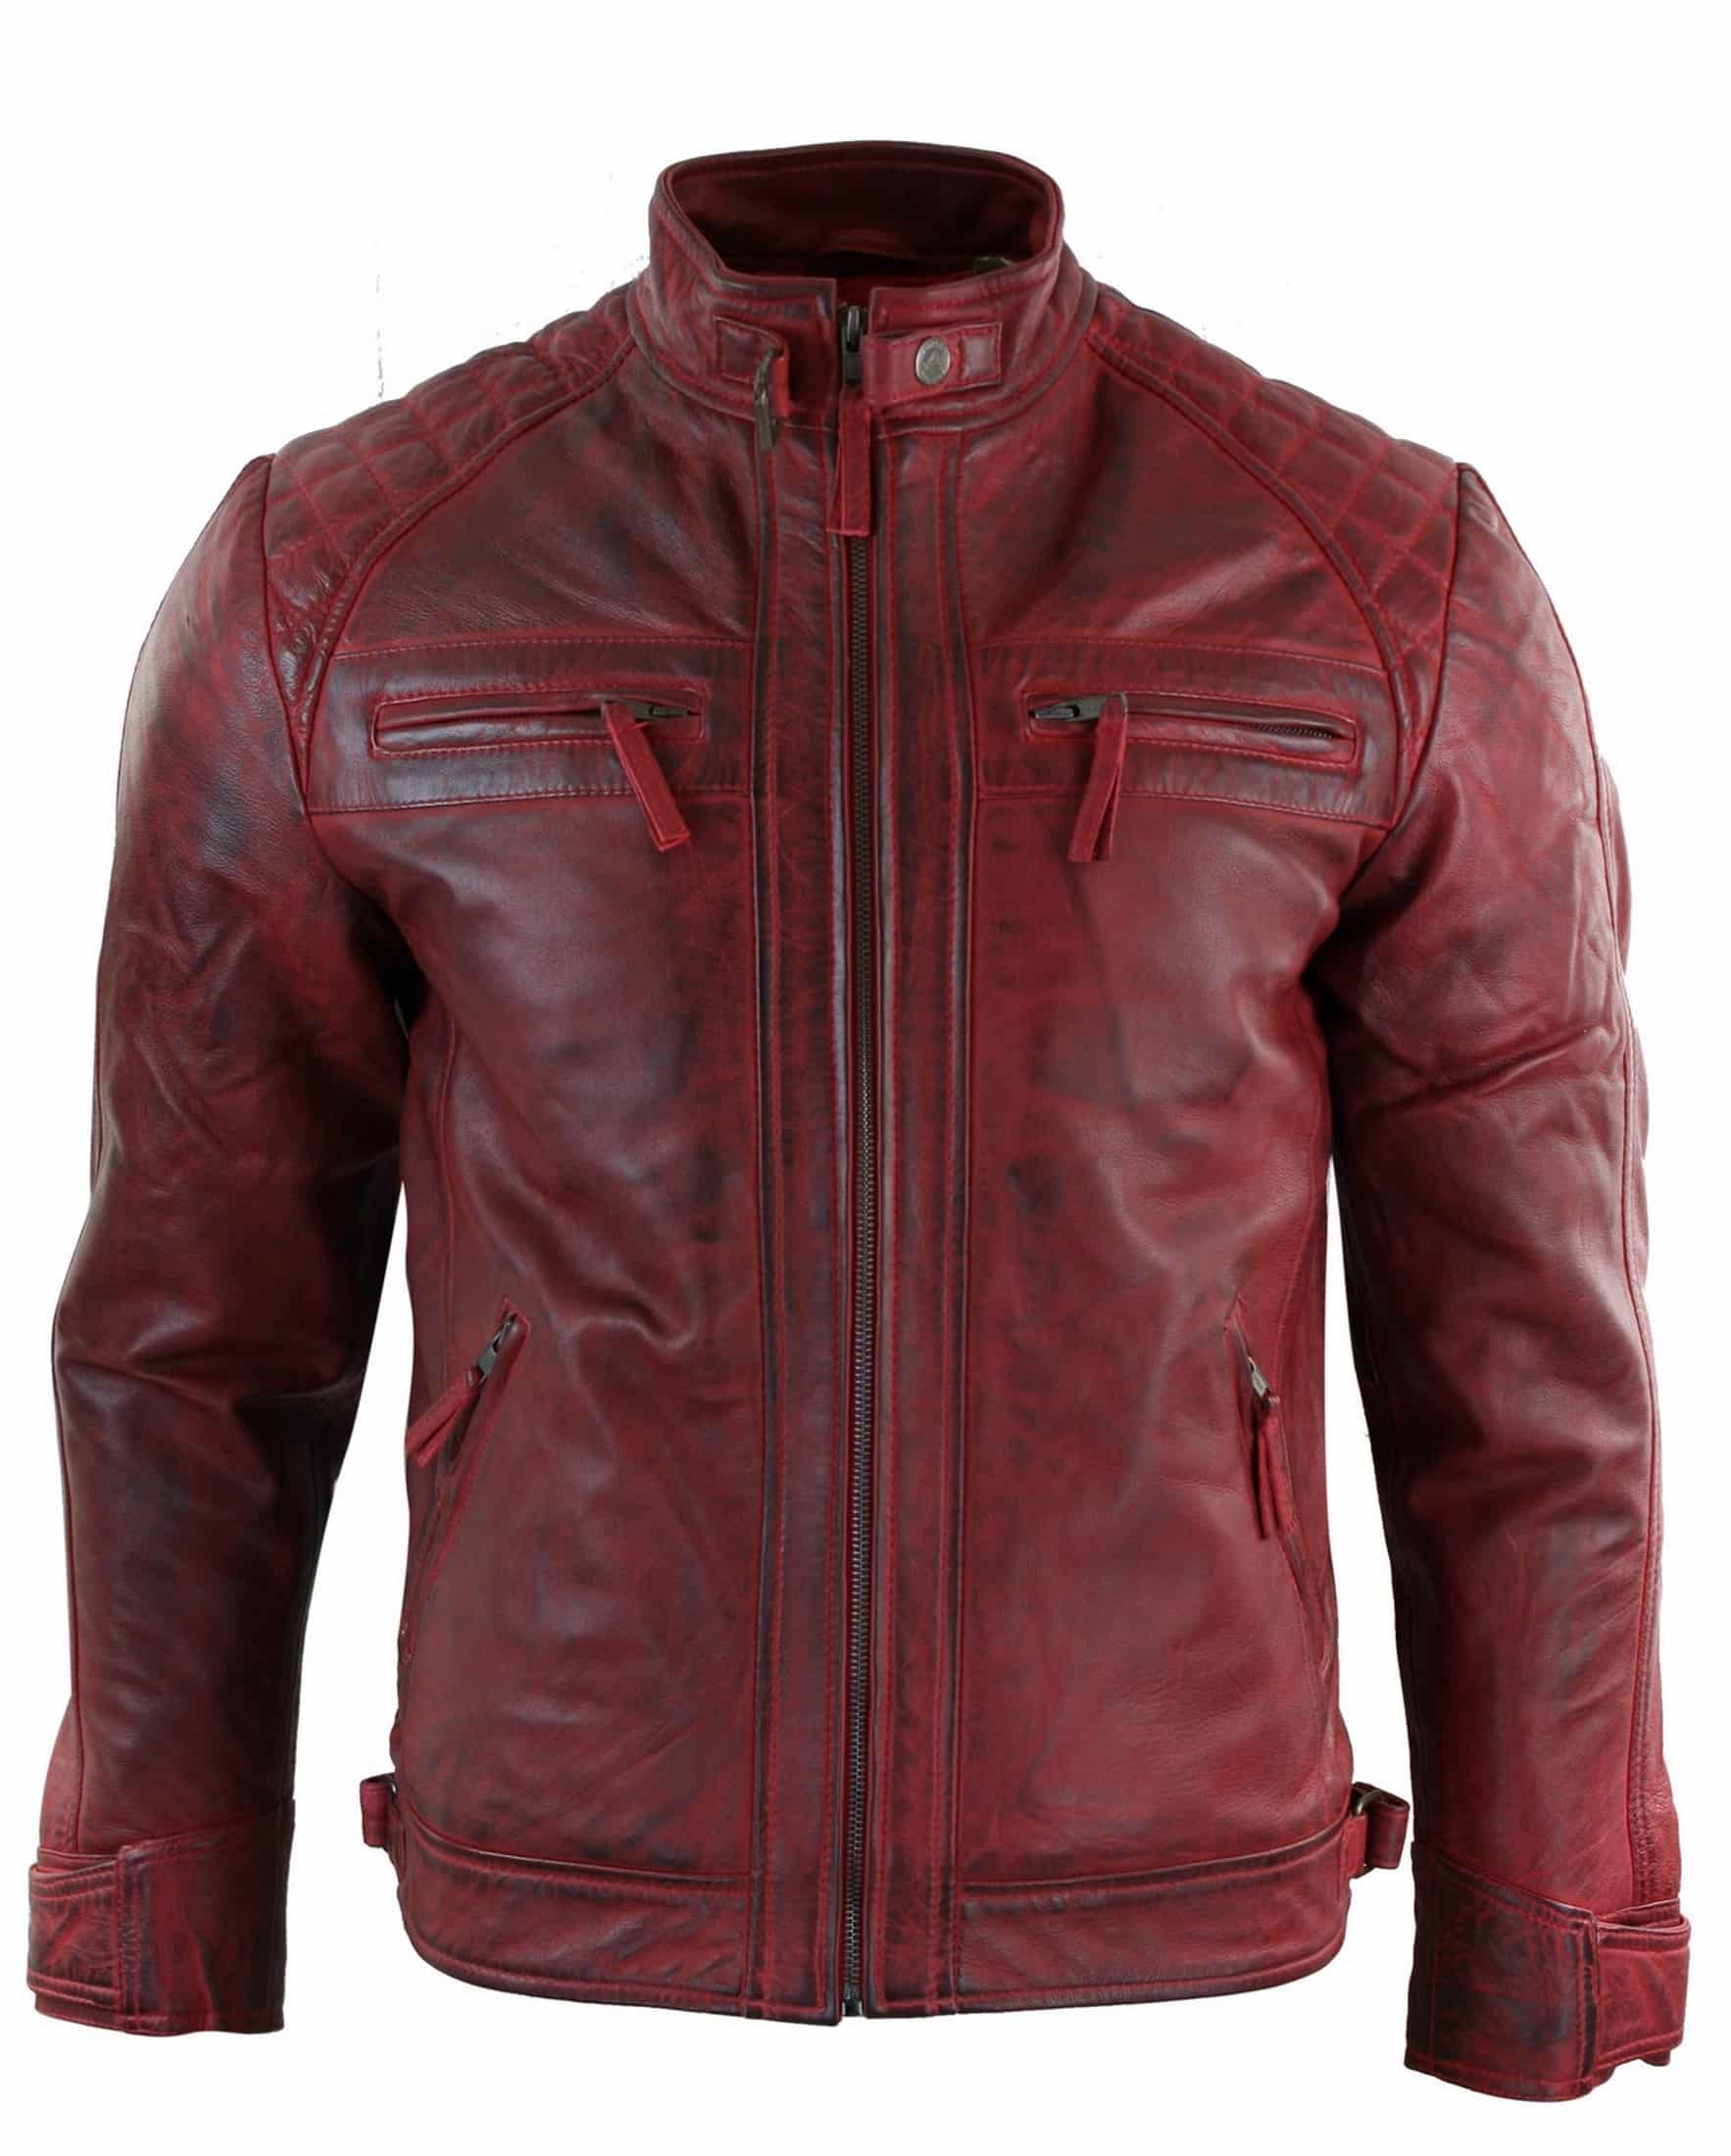 Leather Jacket - Red | Mens fashion suits, Leather jeans men, Gentlemen wear